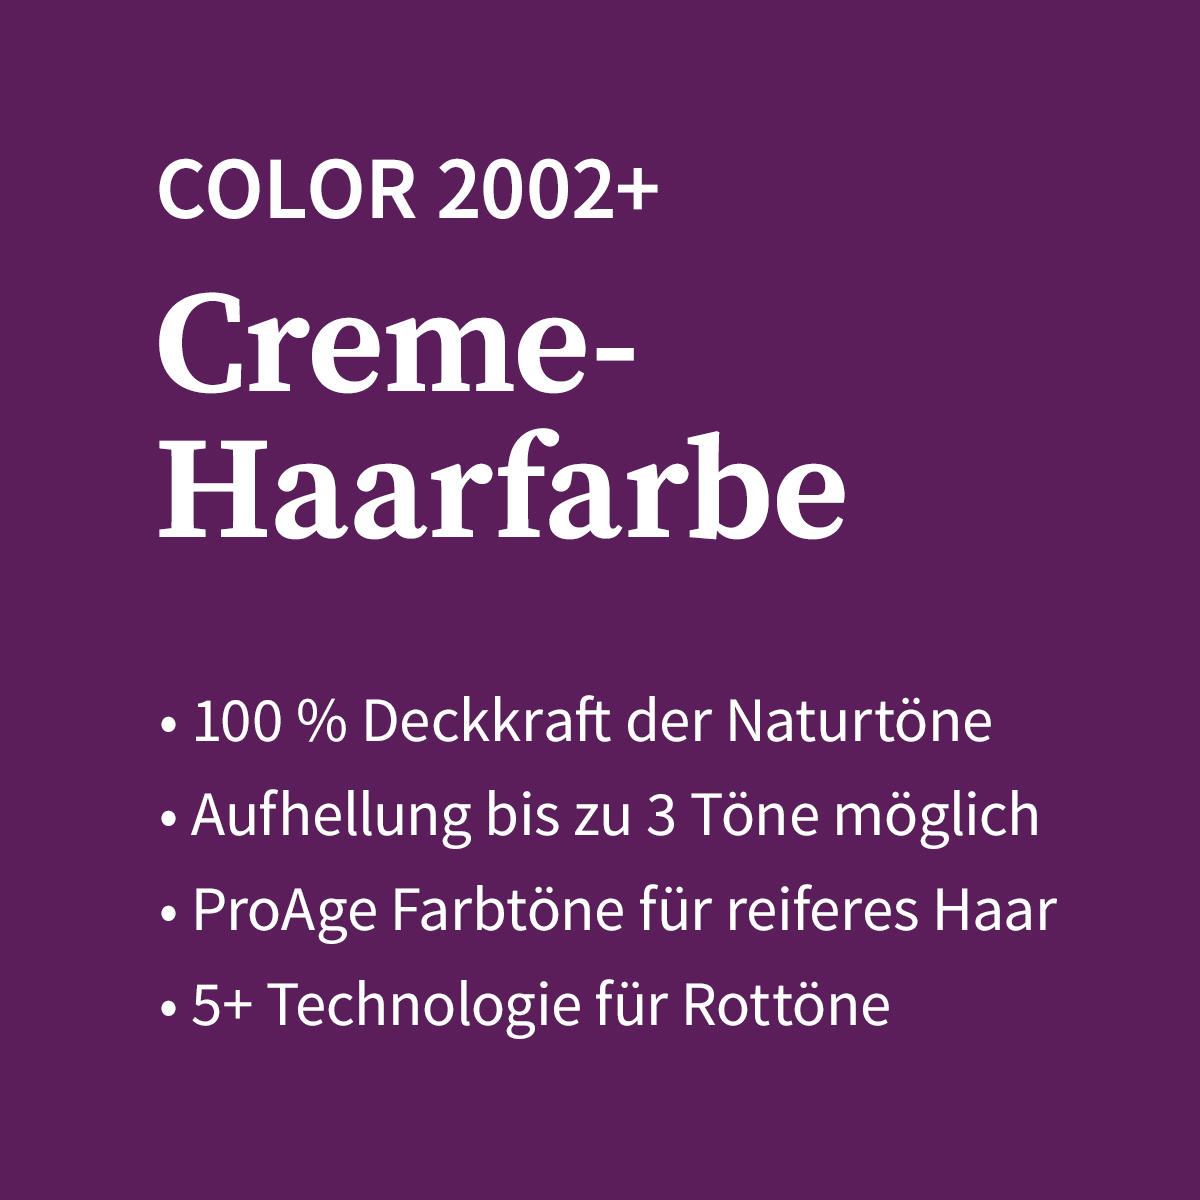 Basler Color 2002+ Cremehaarfarbe 5/0 hellbraun, Tube 60 ml - 4